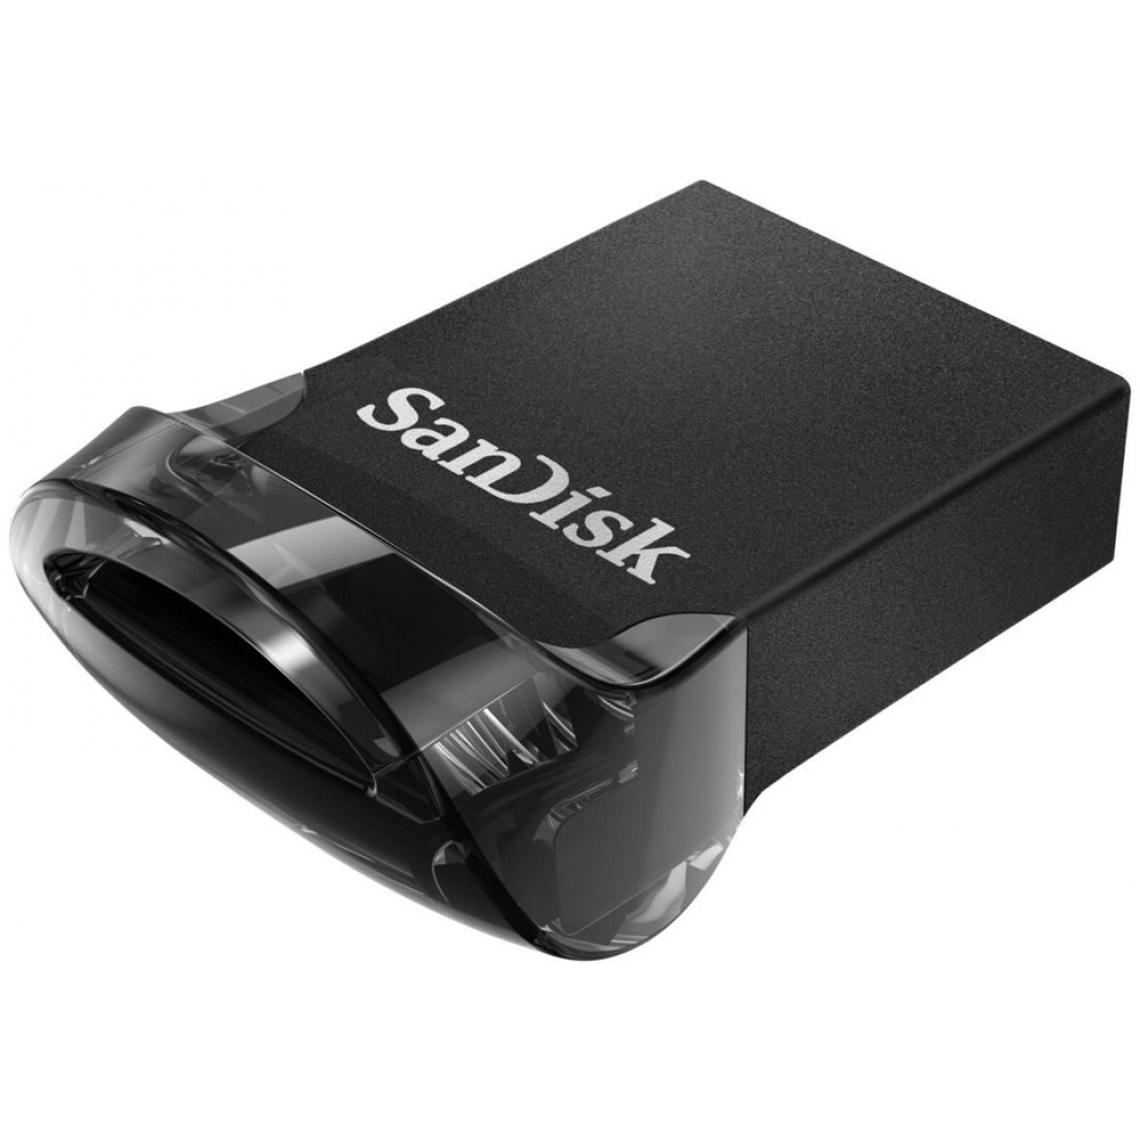 Sandisk - Ultra Fit 256 GB - Clés USB